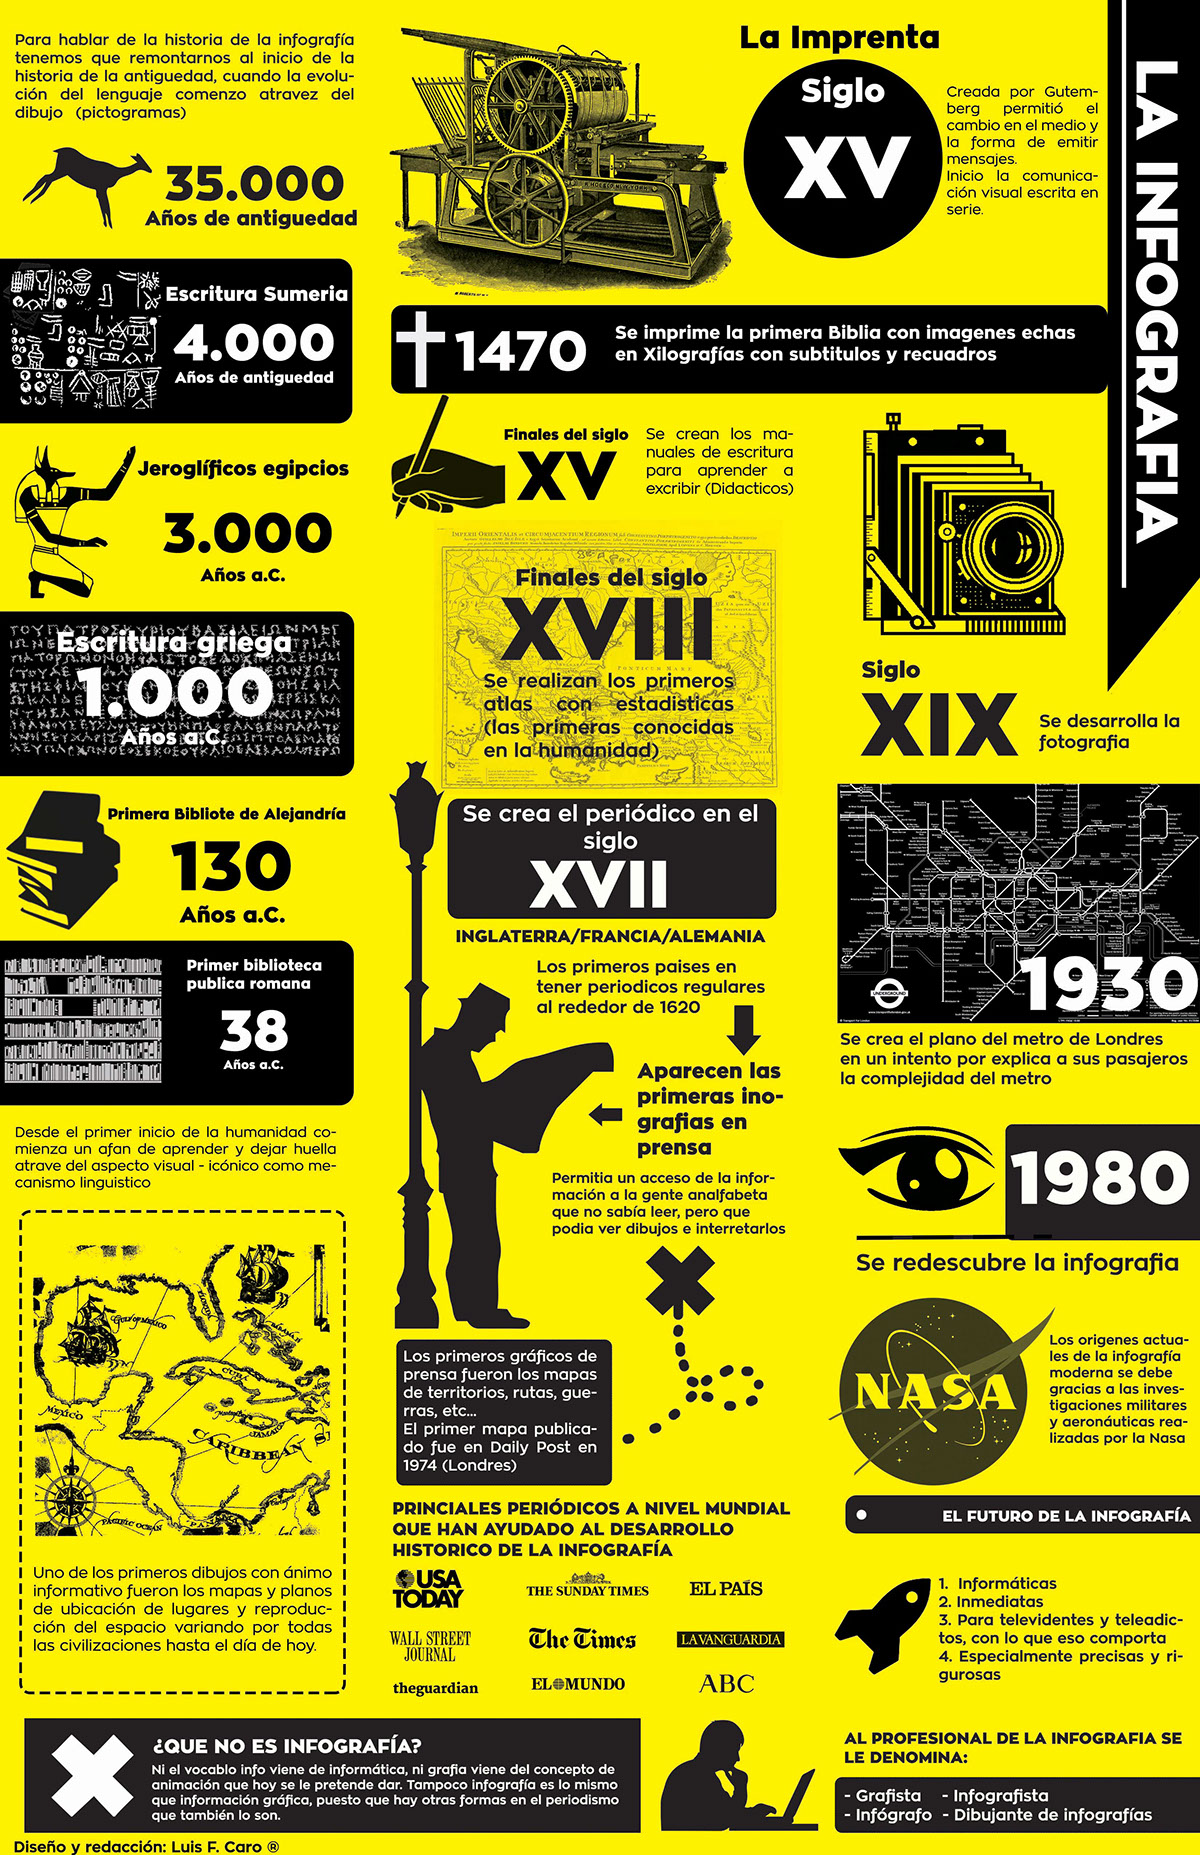 Historia De Internet Infografia Infographic Tics Y Formaci 243 N - Riset